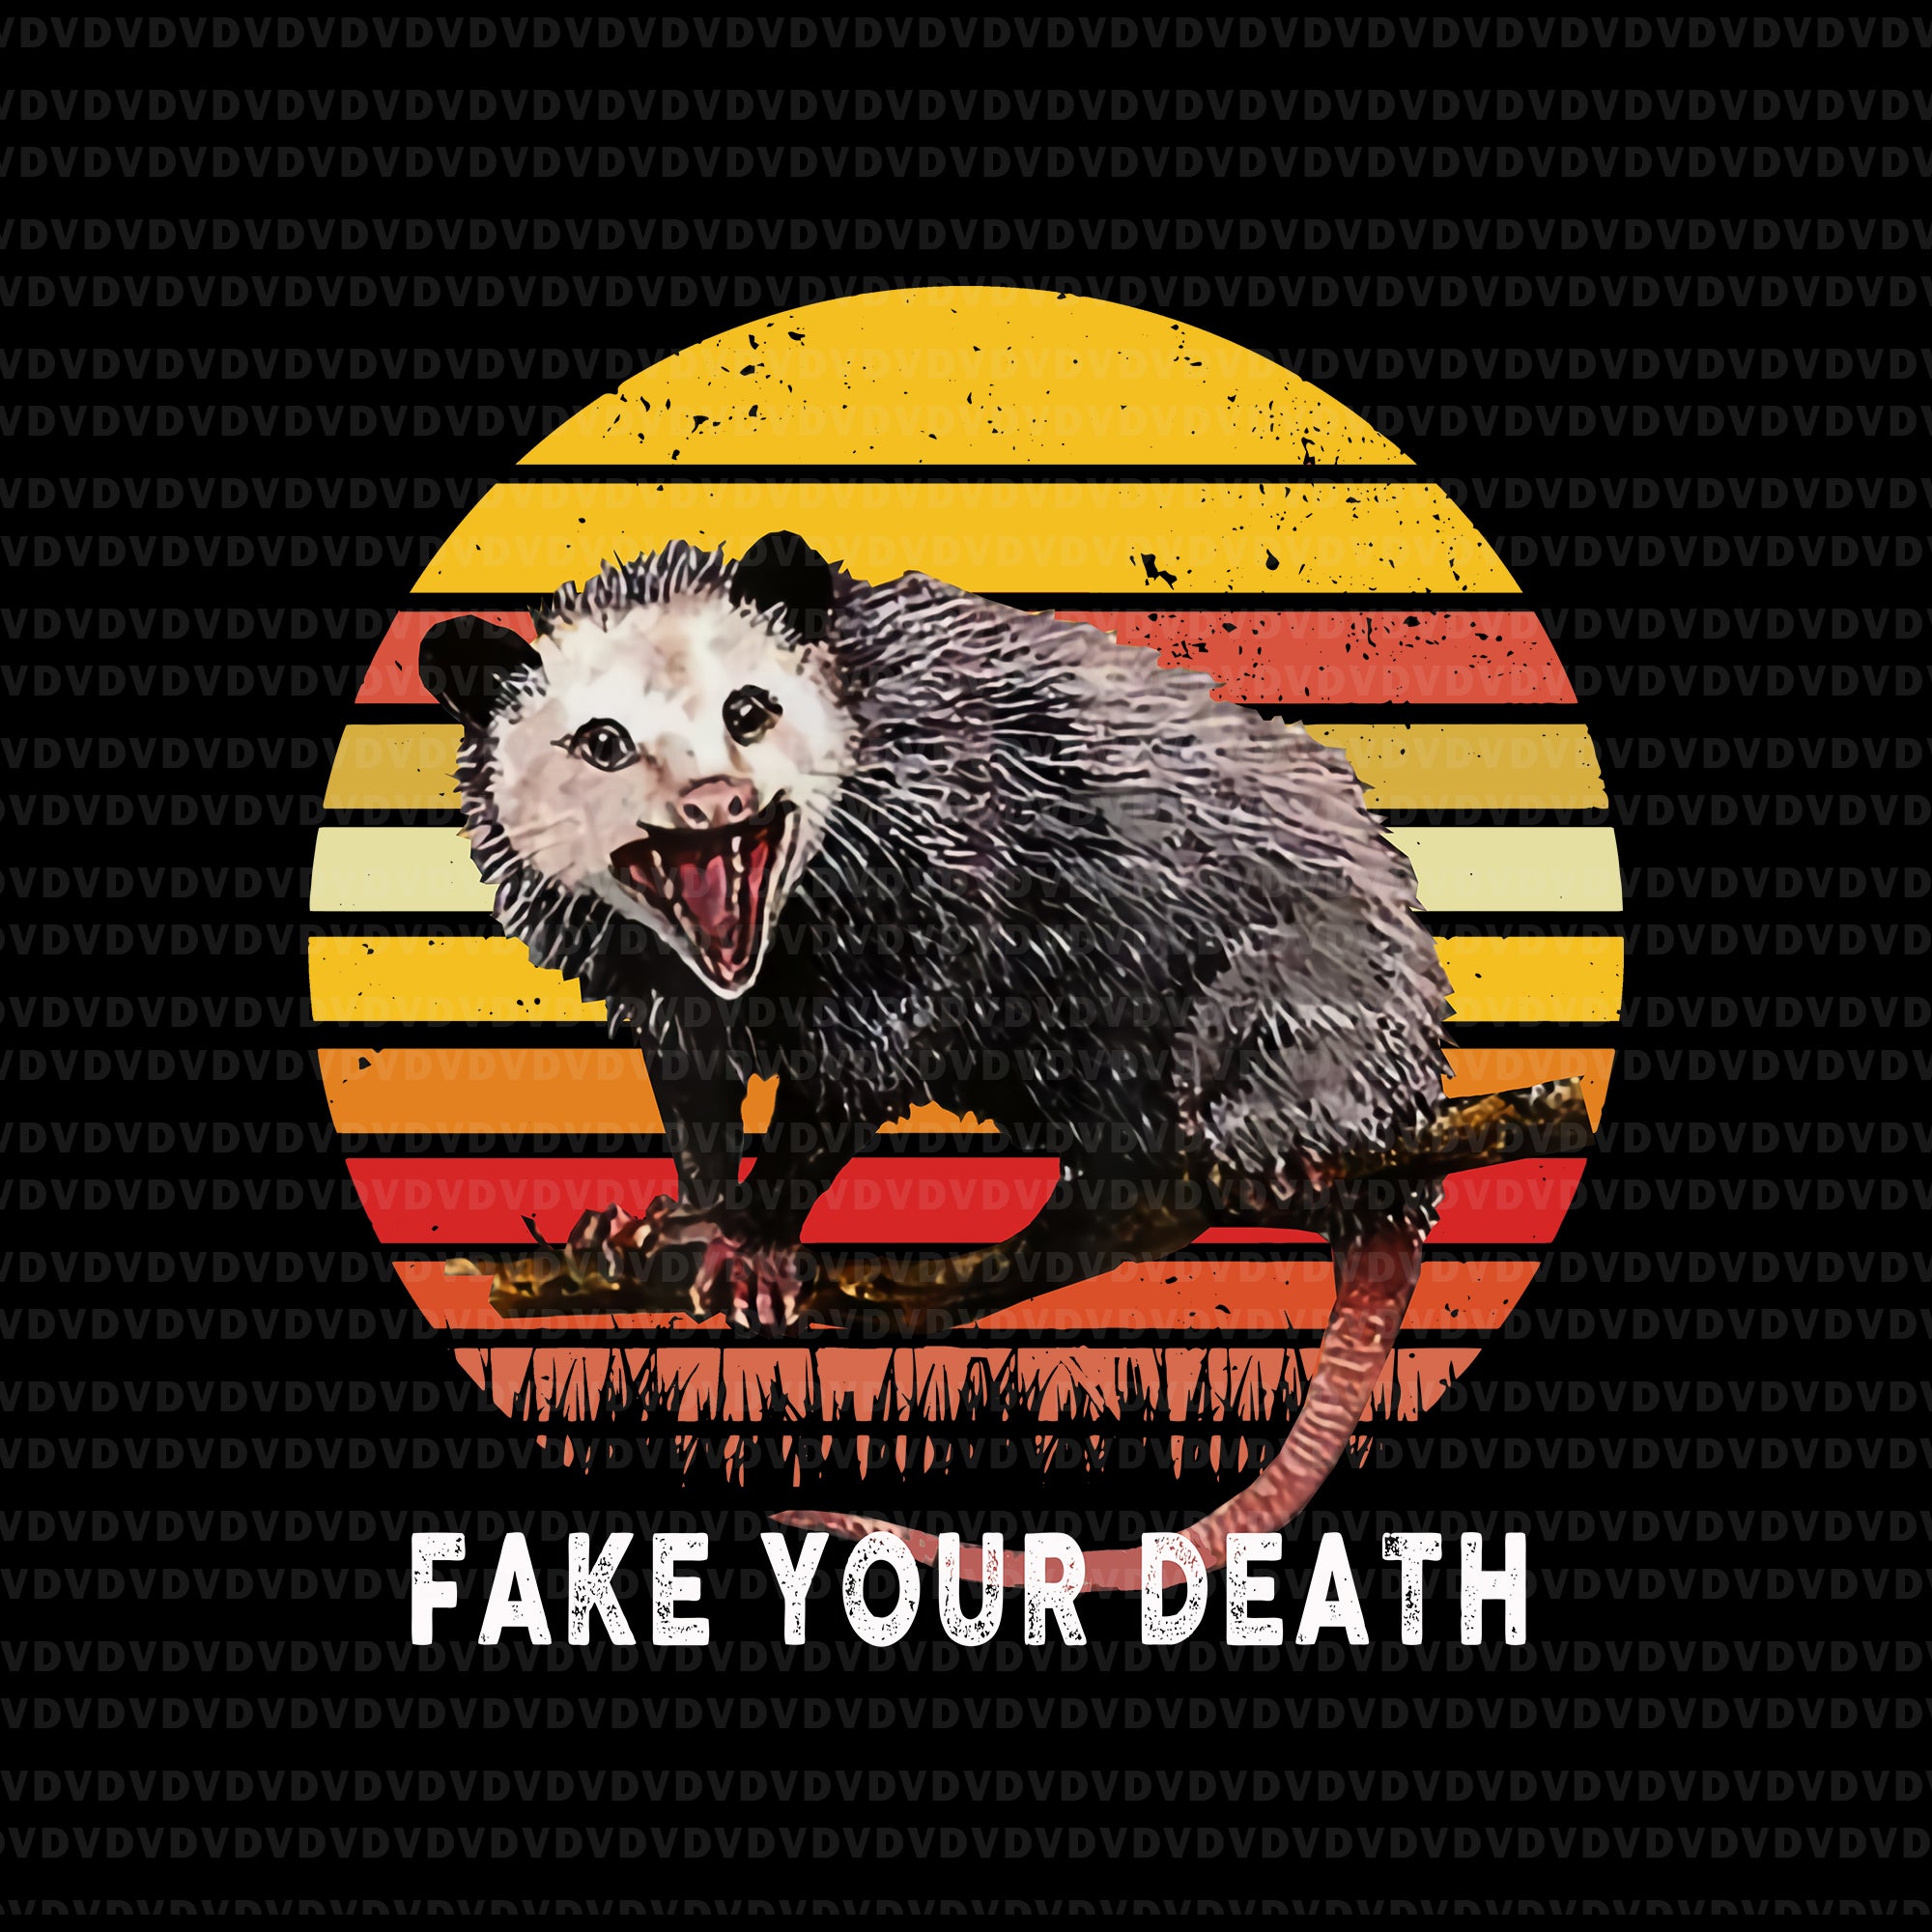 Live ugly fake your death opossum png, live ugly fake your death opossum, live ugly fake your death opossum design